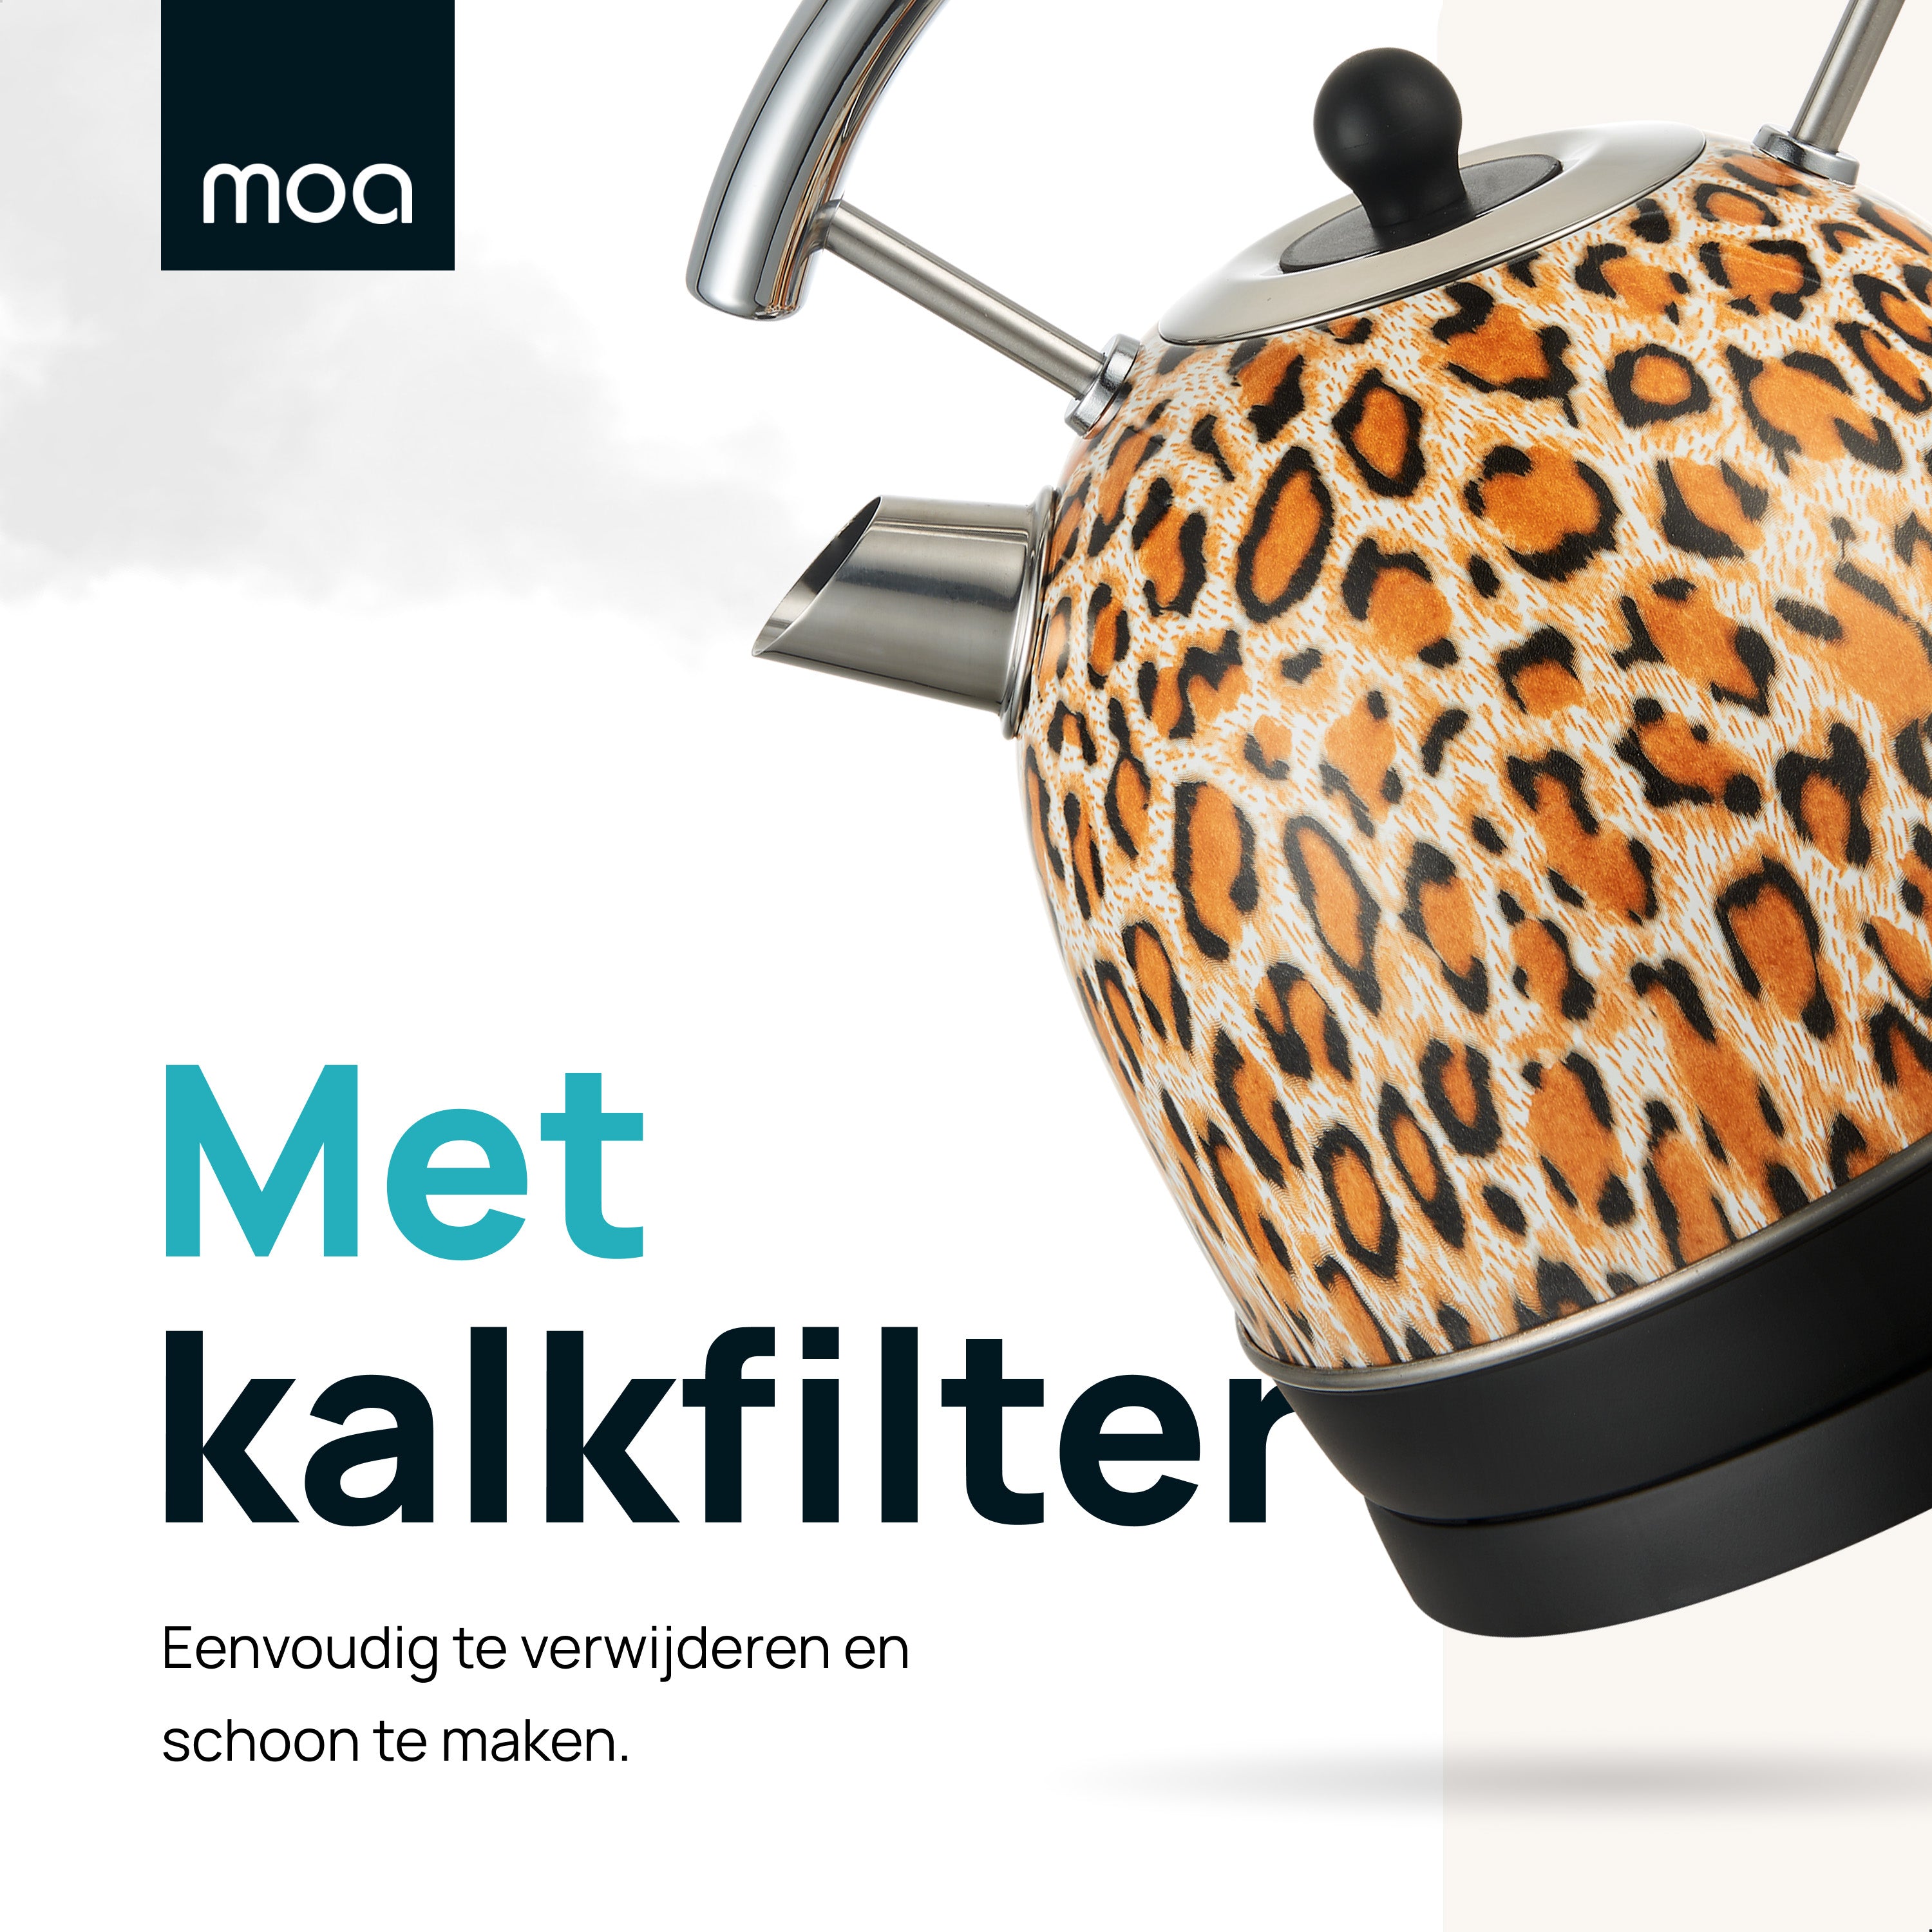 MOA Retro Waterkoker - Panter Print - EK4TPA